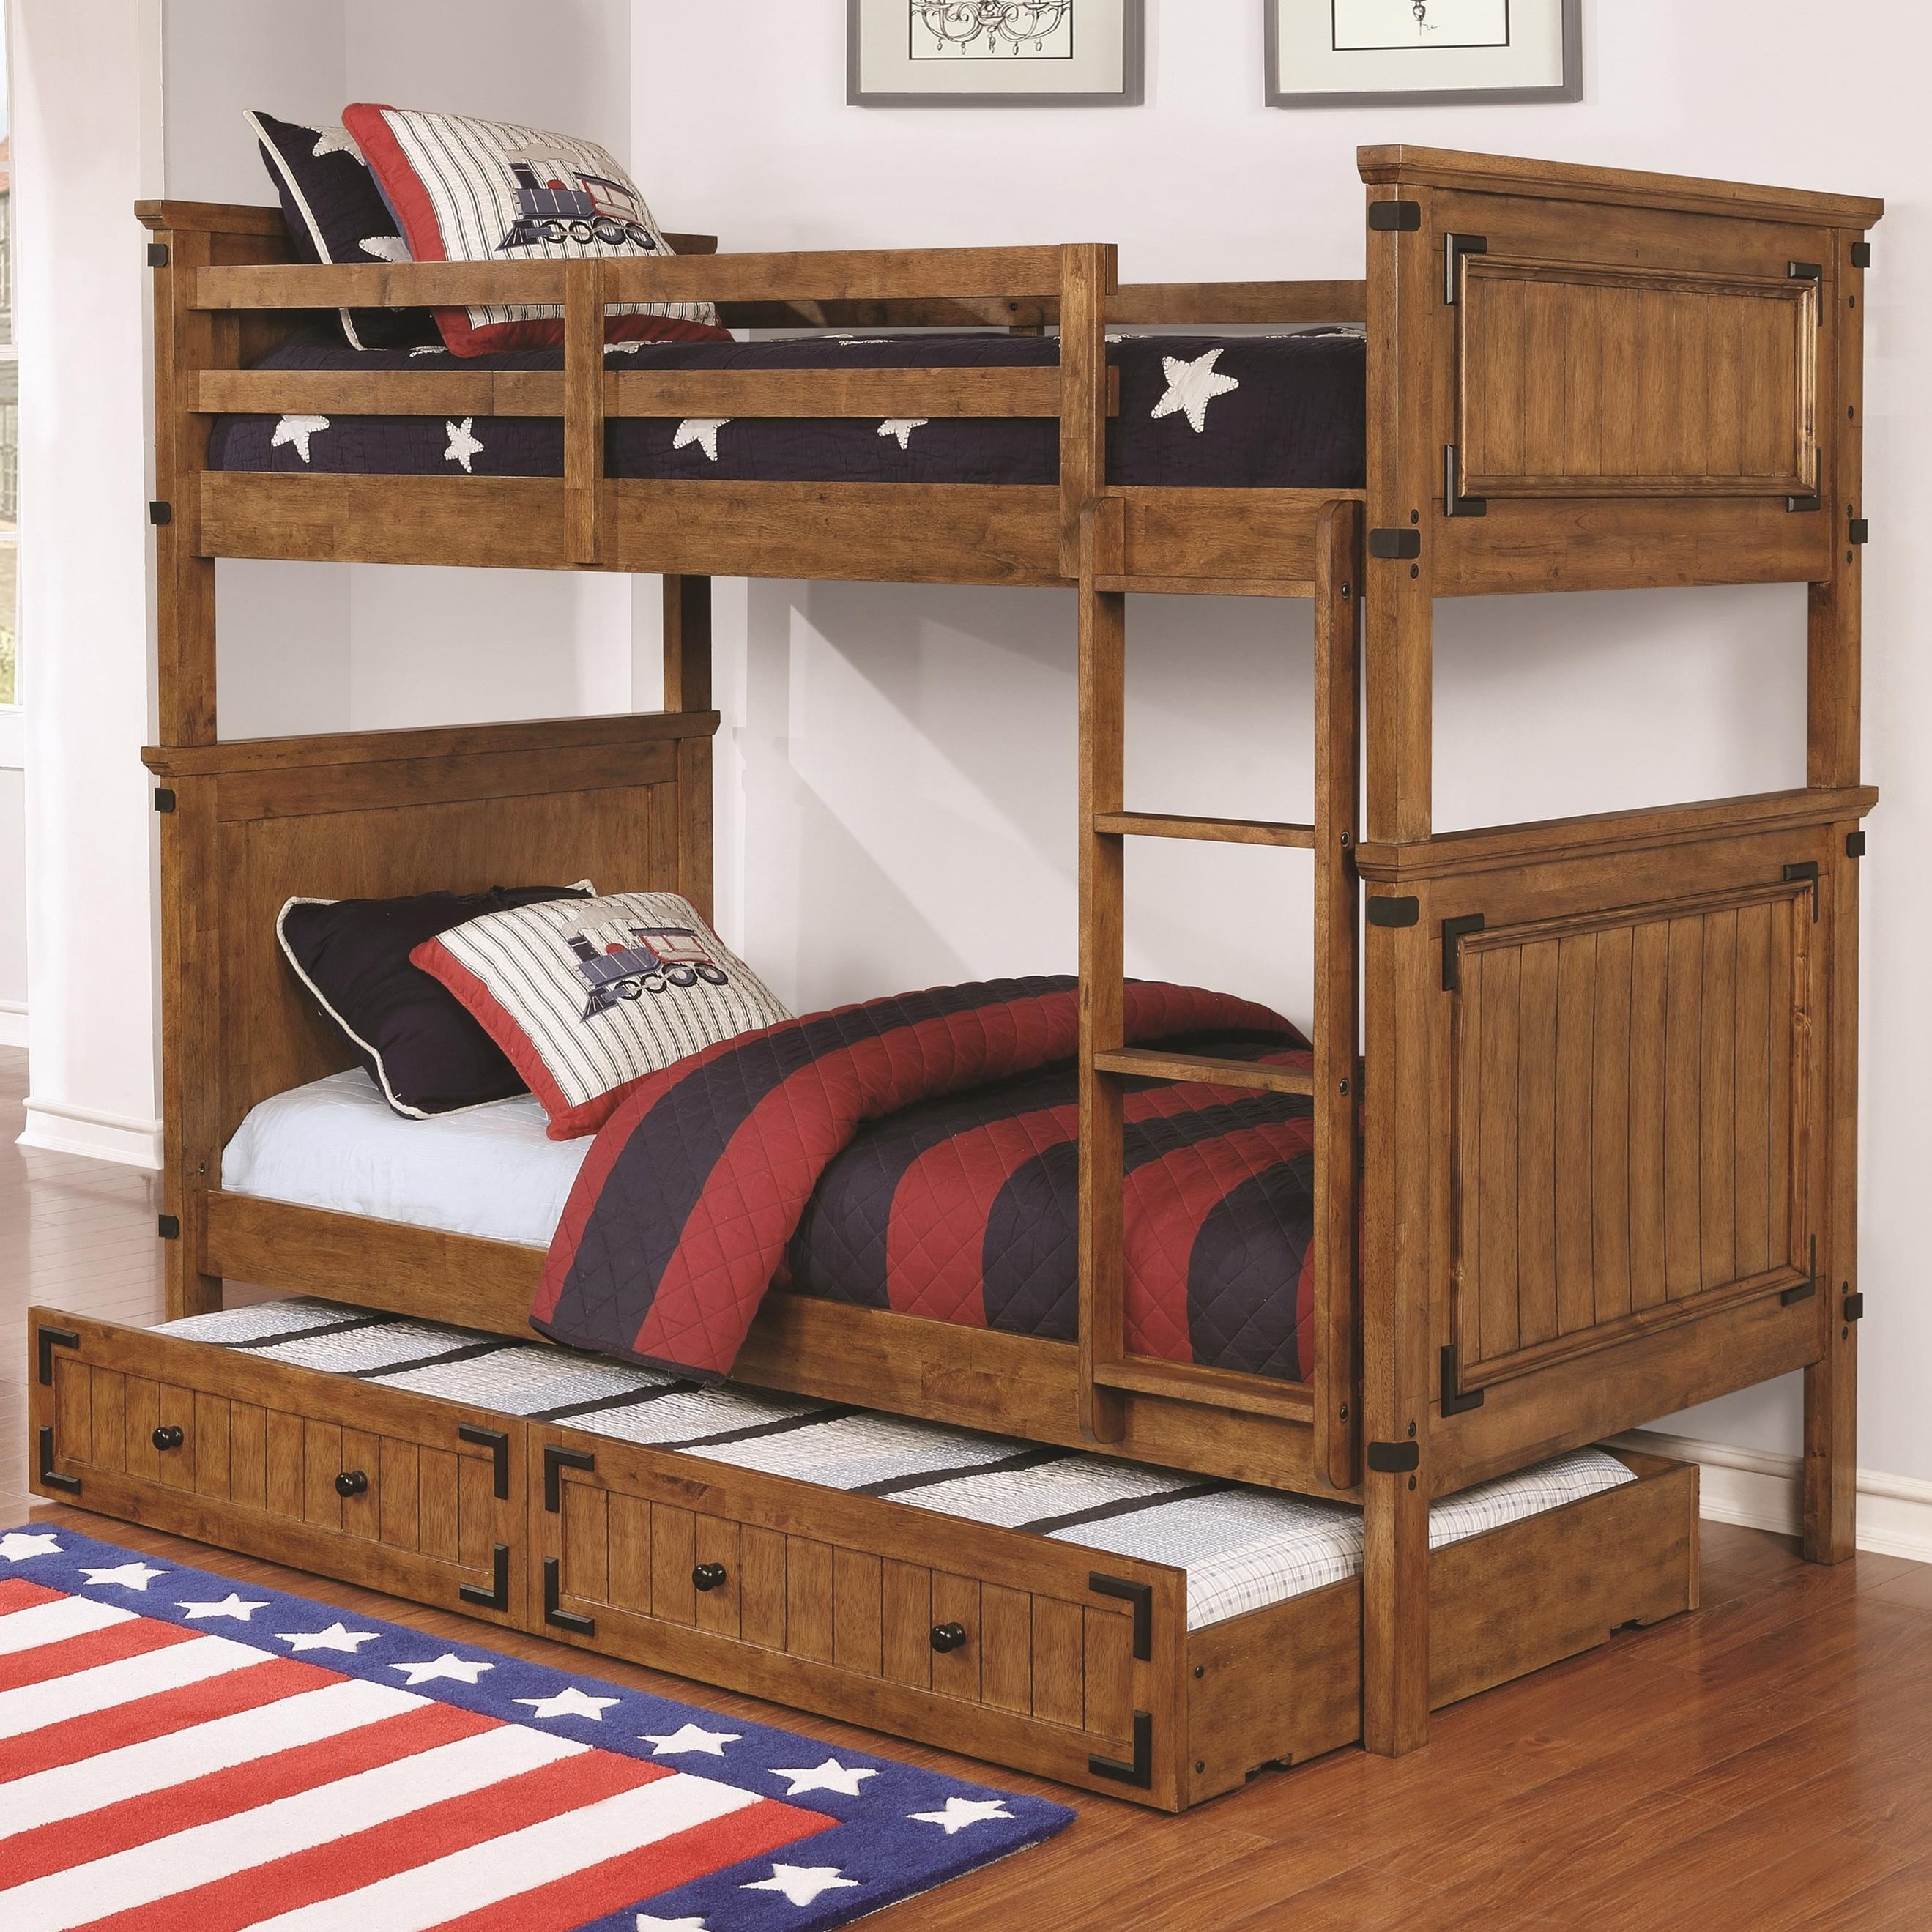 furniture stores bunk beds